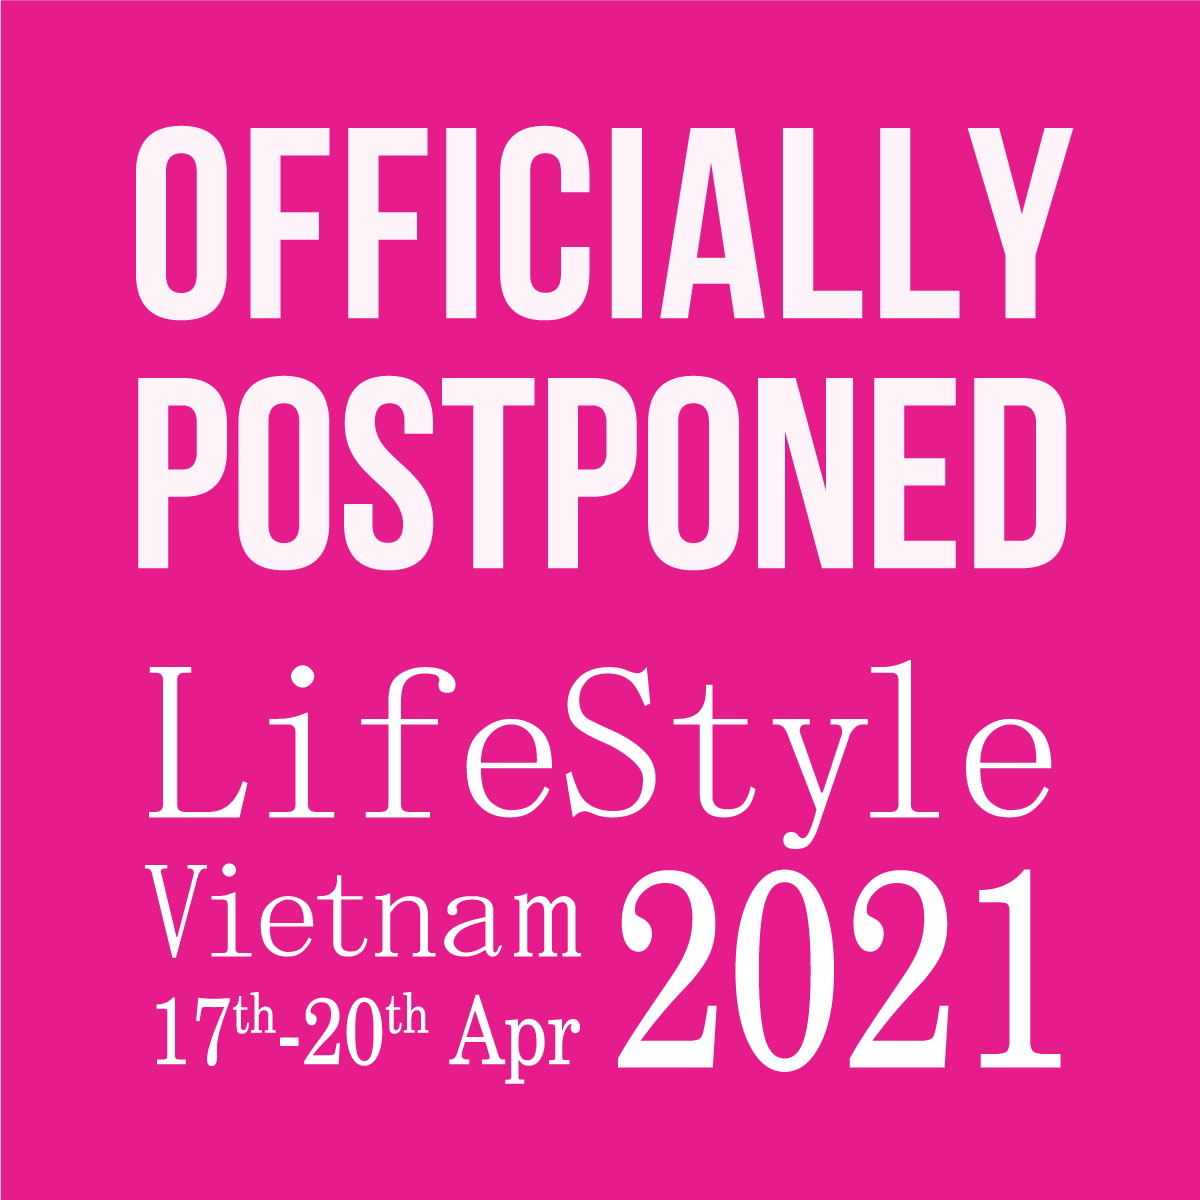 OFFICIAL ANNOUNCEMENT - Rescheduling of Lifestyle Vietnam 2020